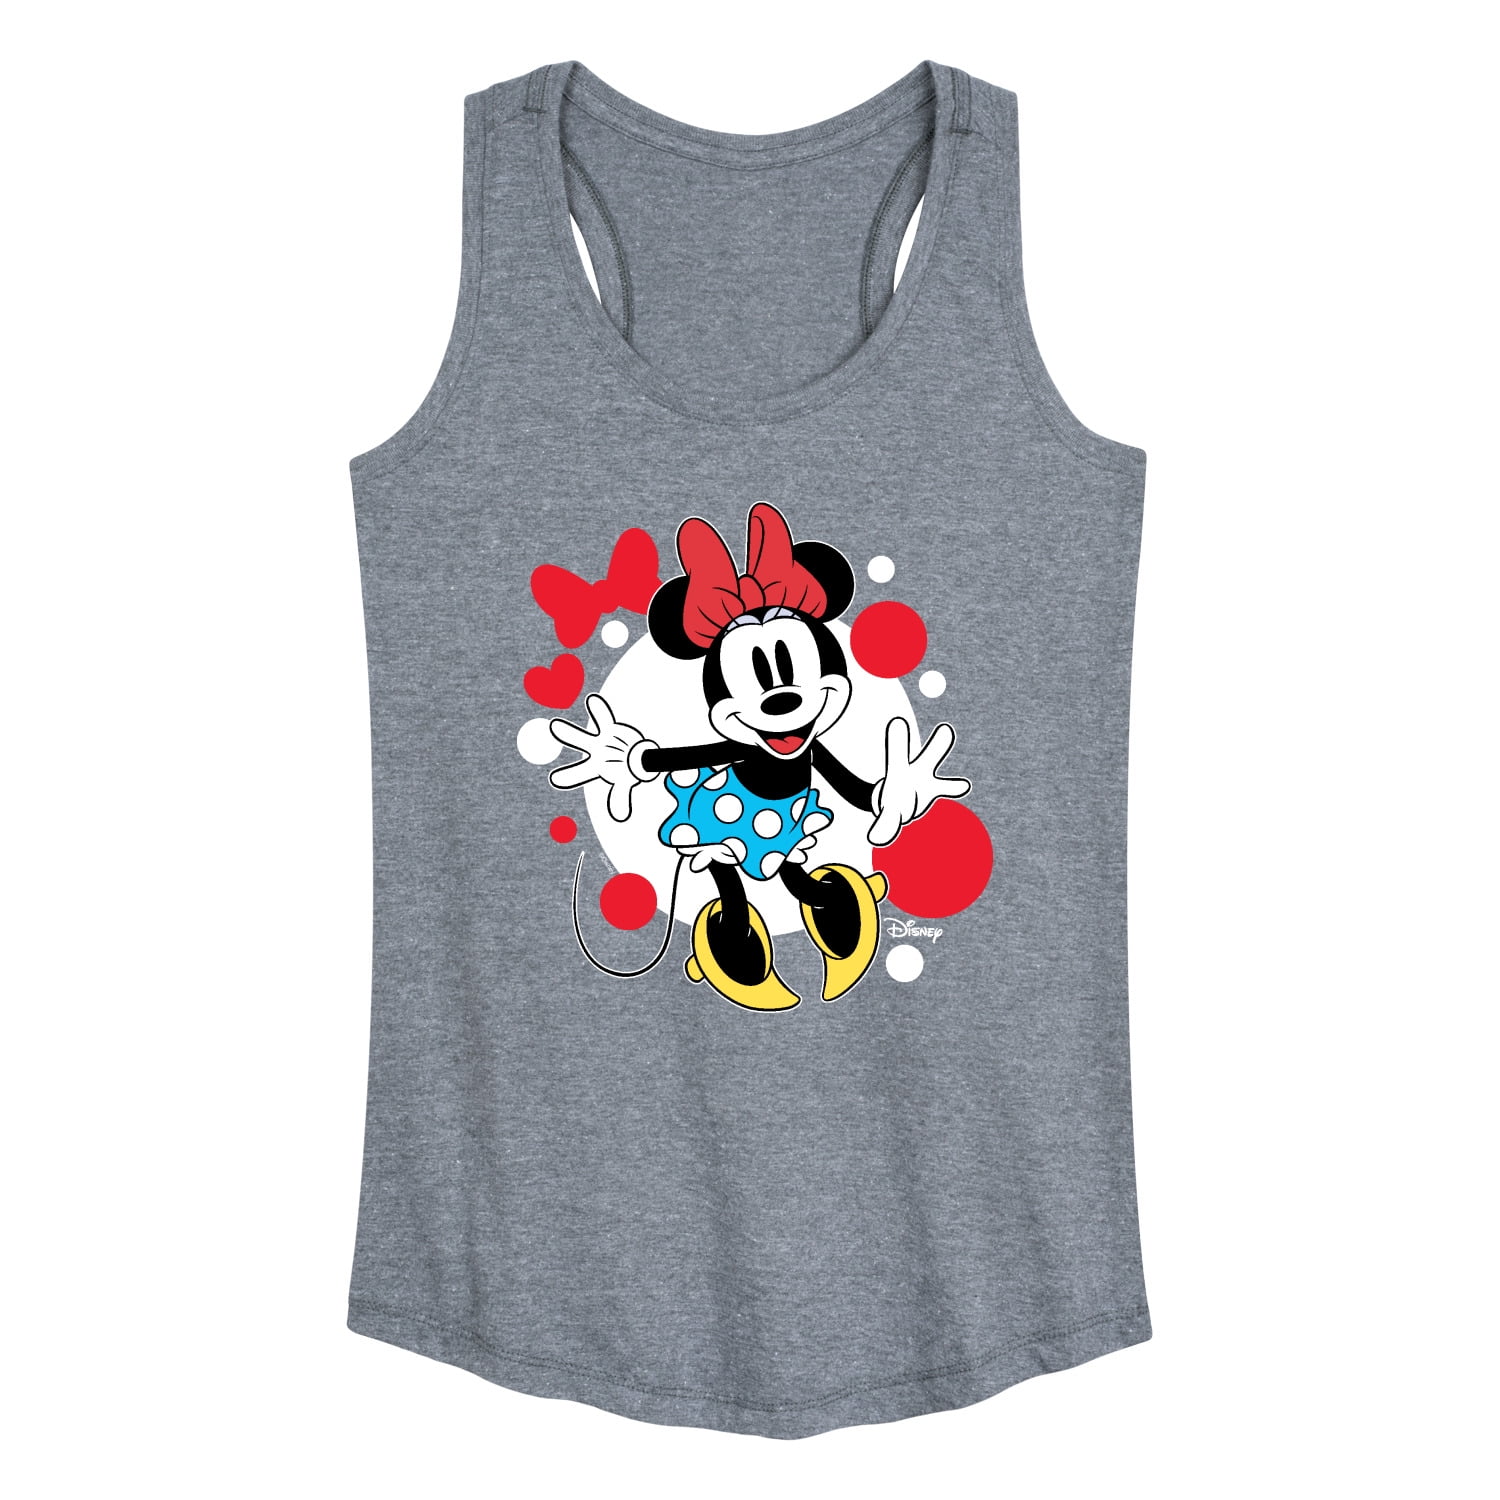 Disney - Mickey & Friends - Minnie Mouse - Classic Minnie - Women's  Racerback Tank Top